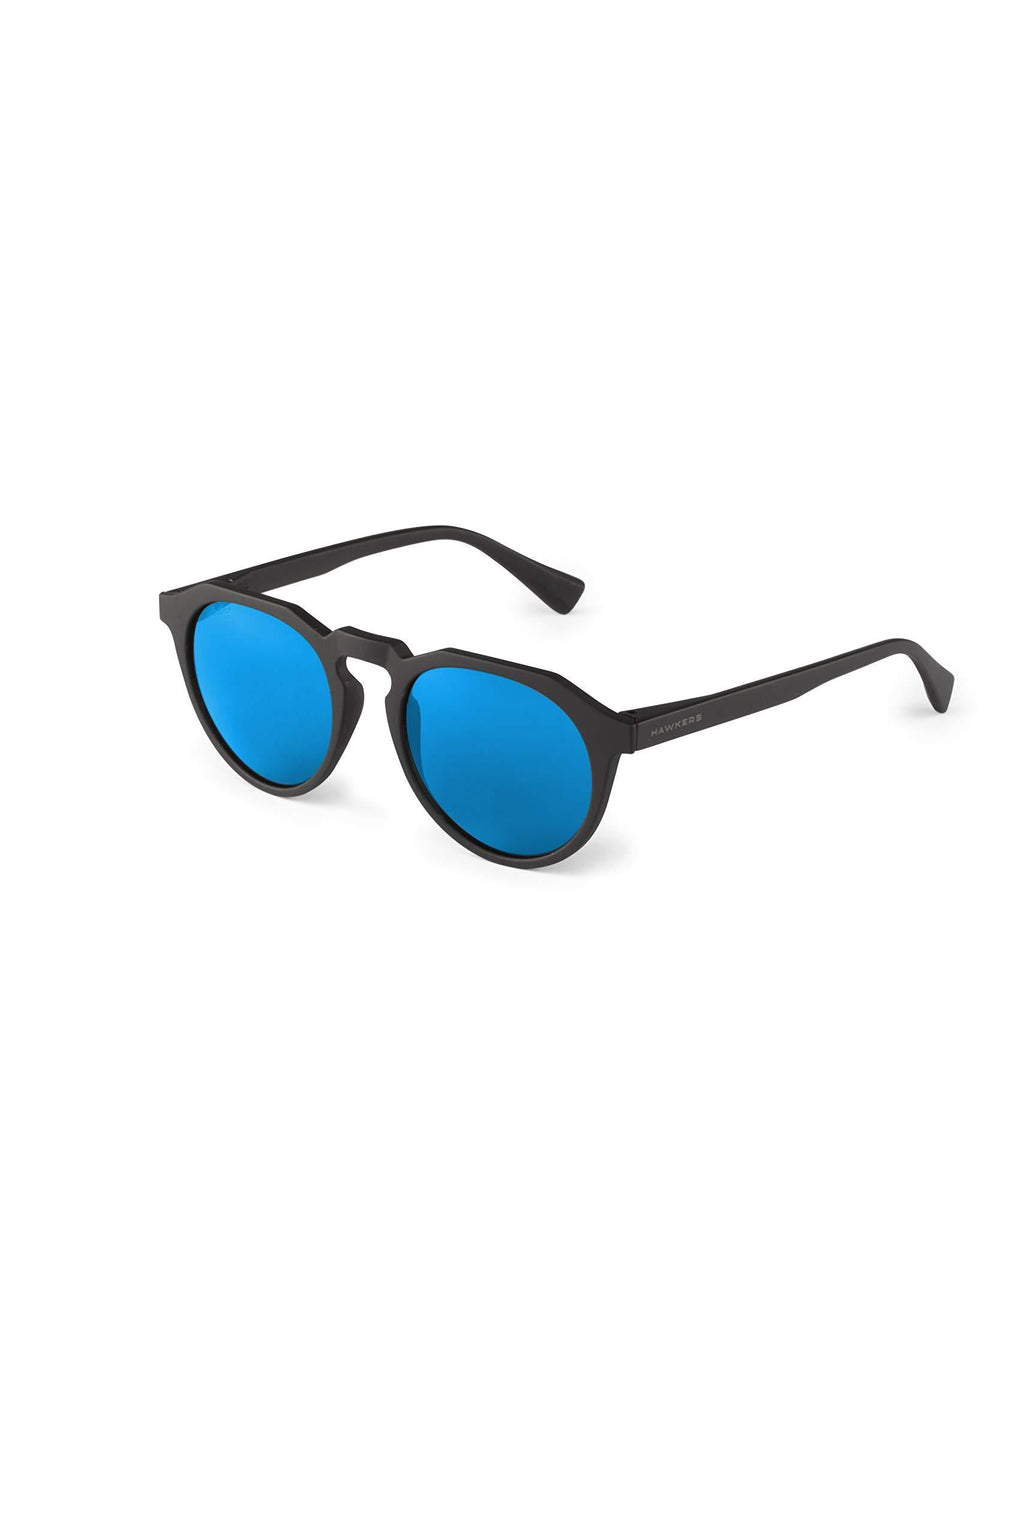 [Australia] - HAWKERS Warwick Sunglasses, Black, One Size 